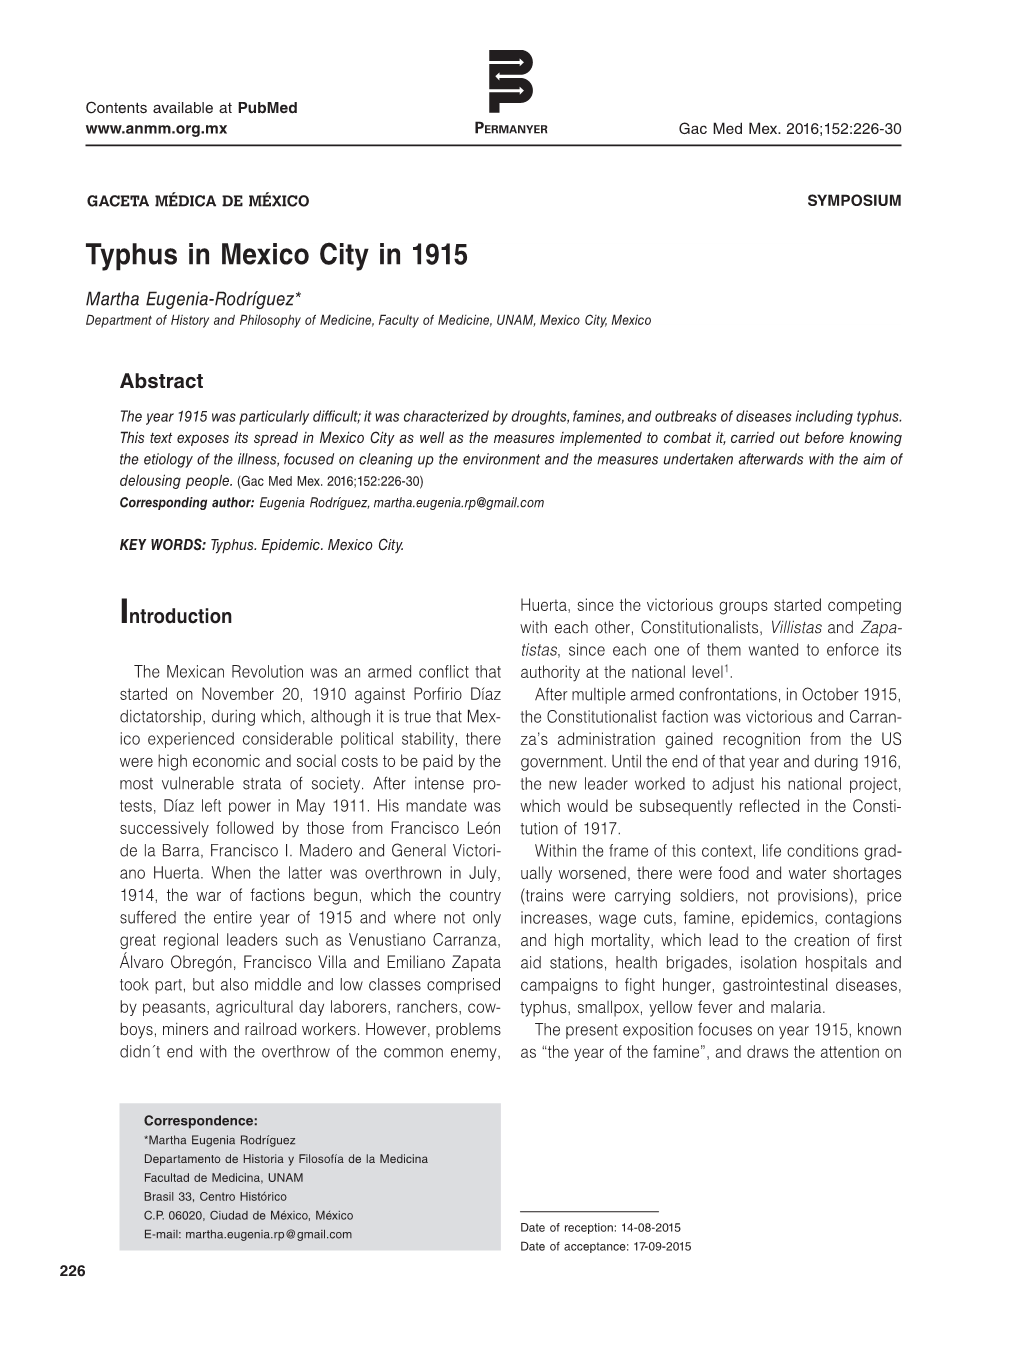 Typhus in Mexico City in 1915